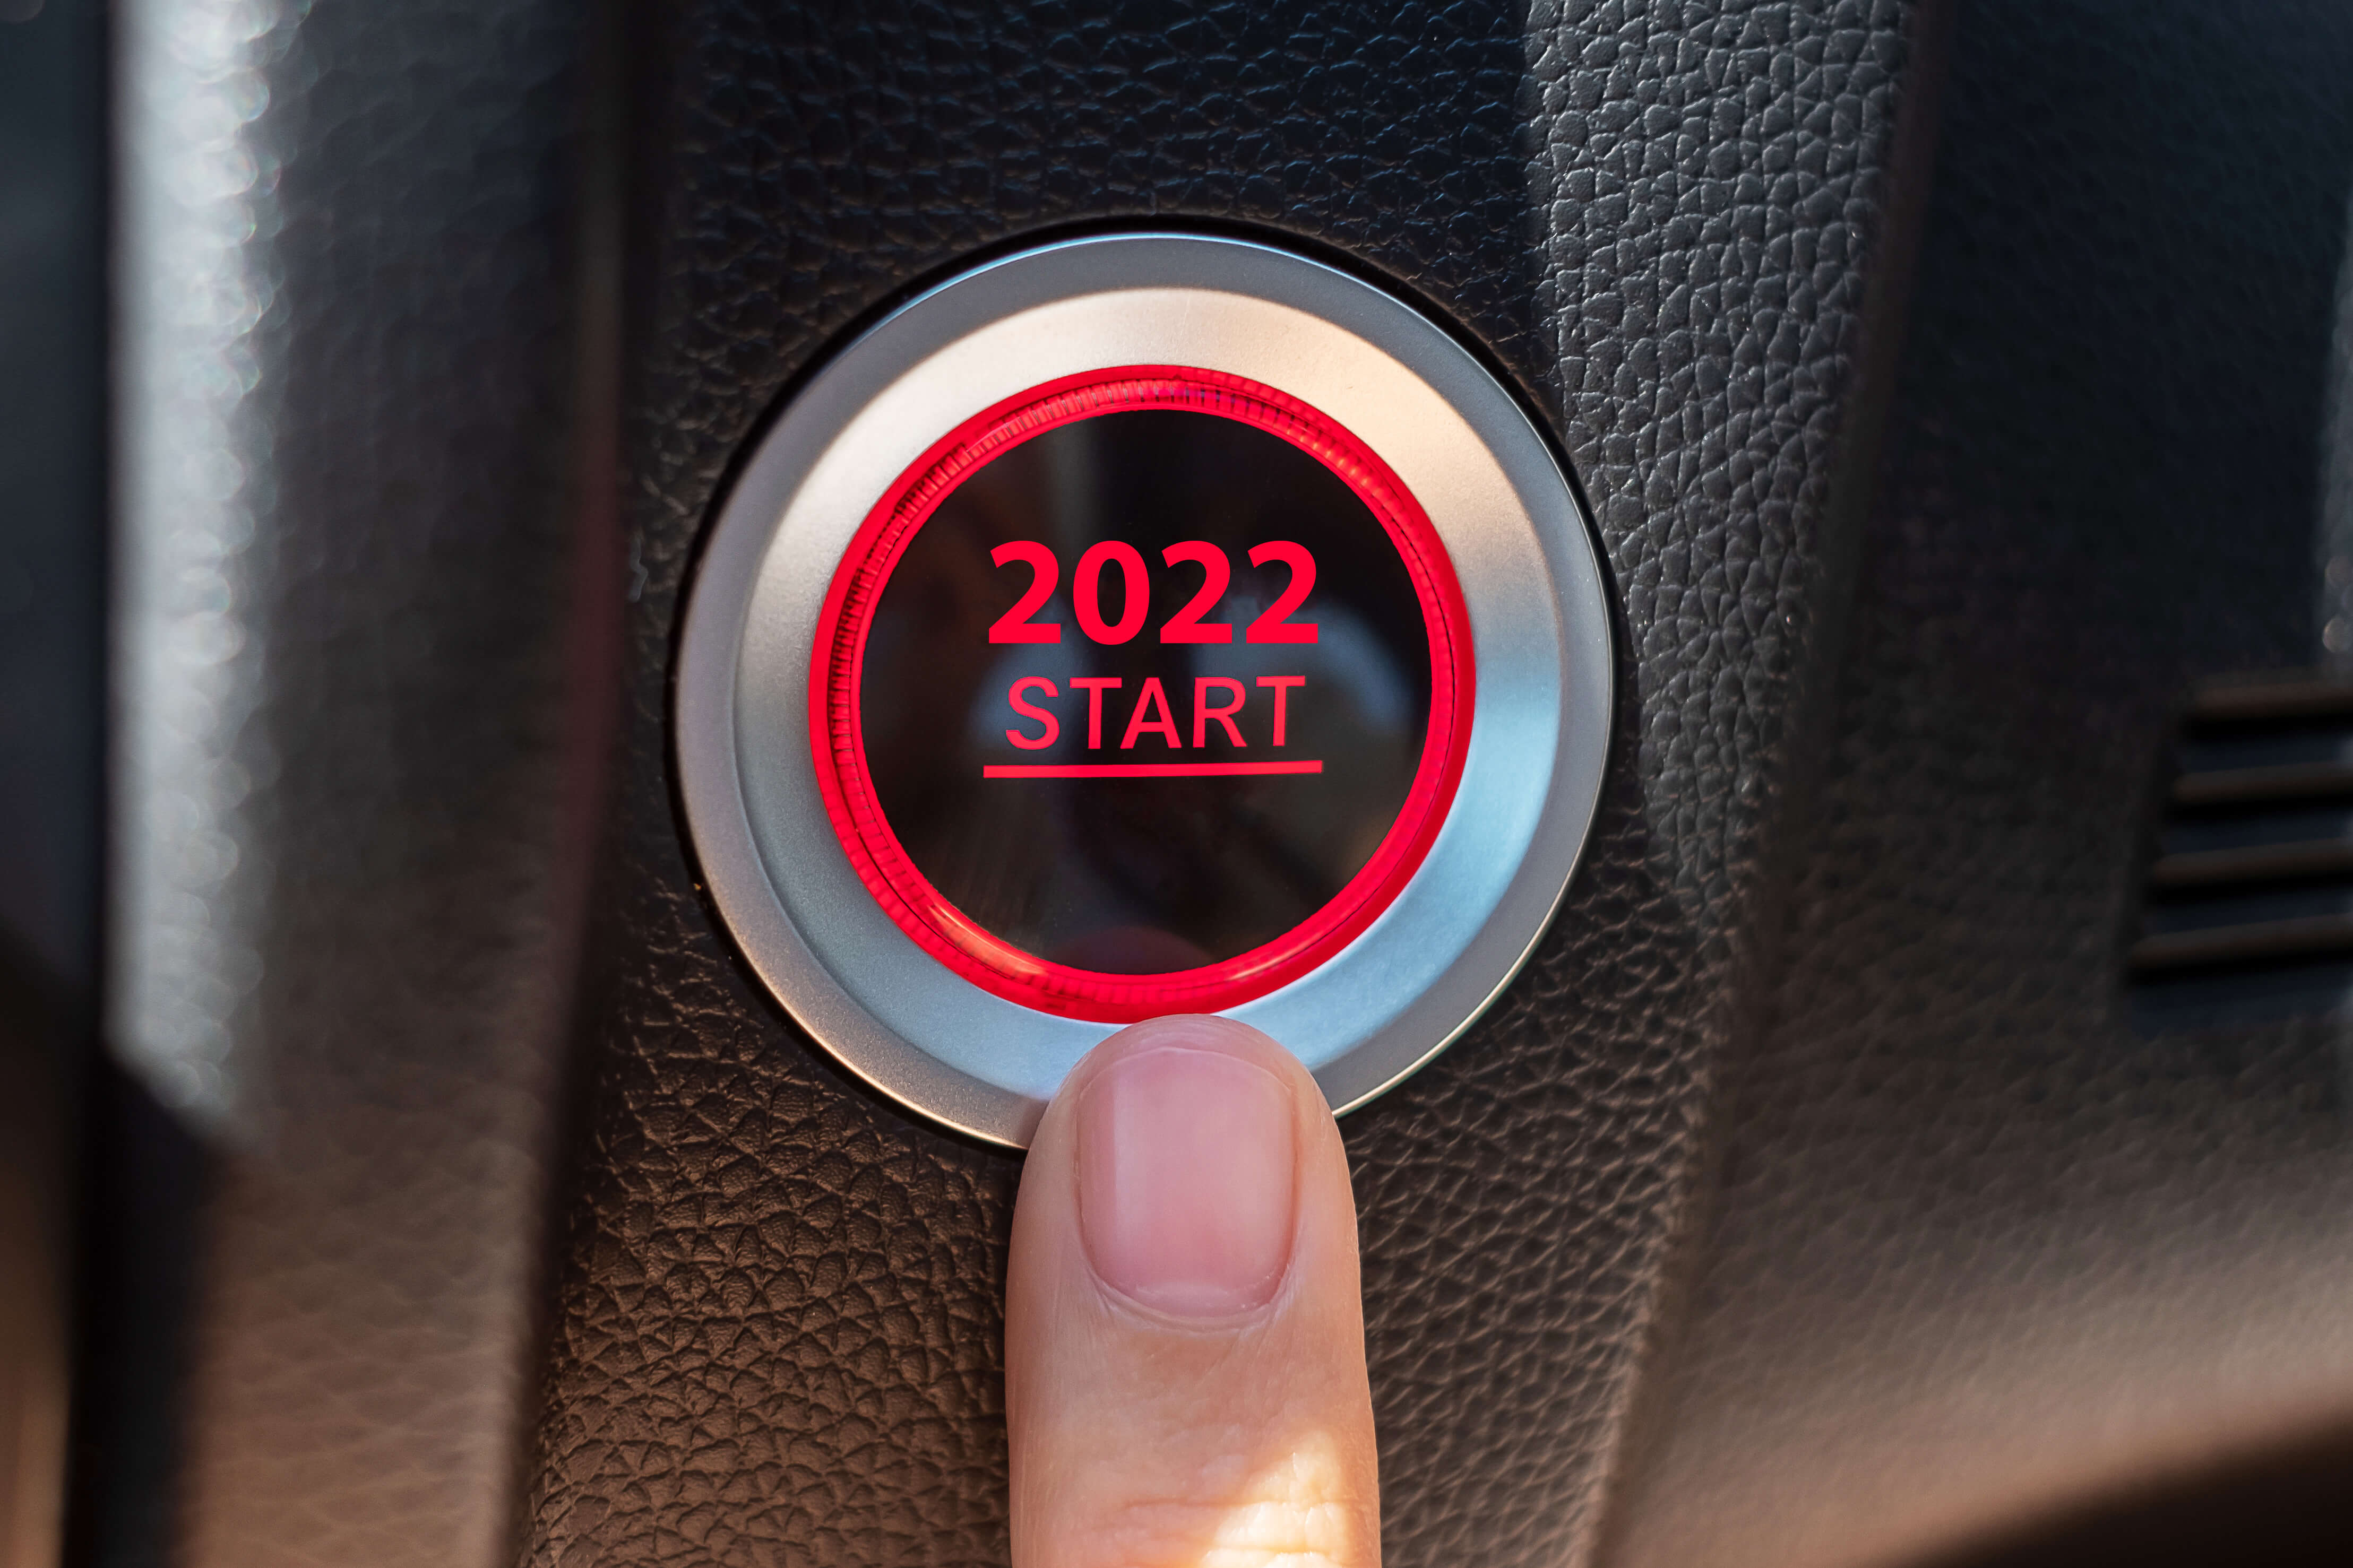 Vehicle start button labeled 2022 start